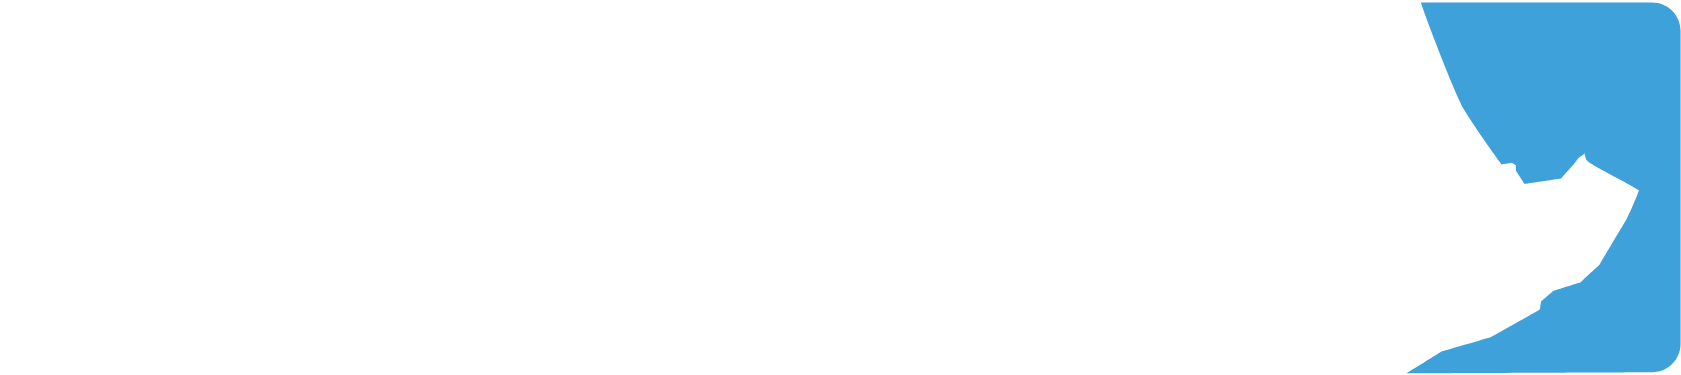 Bank AlJazira logo grand pour les fonds sombres (PNG transparent)